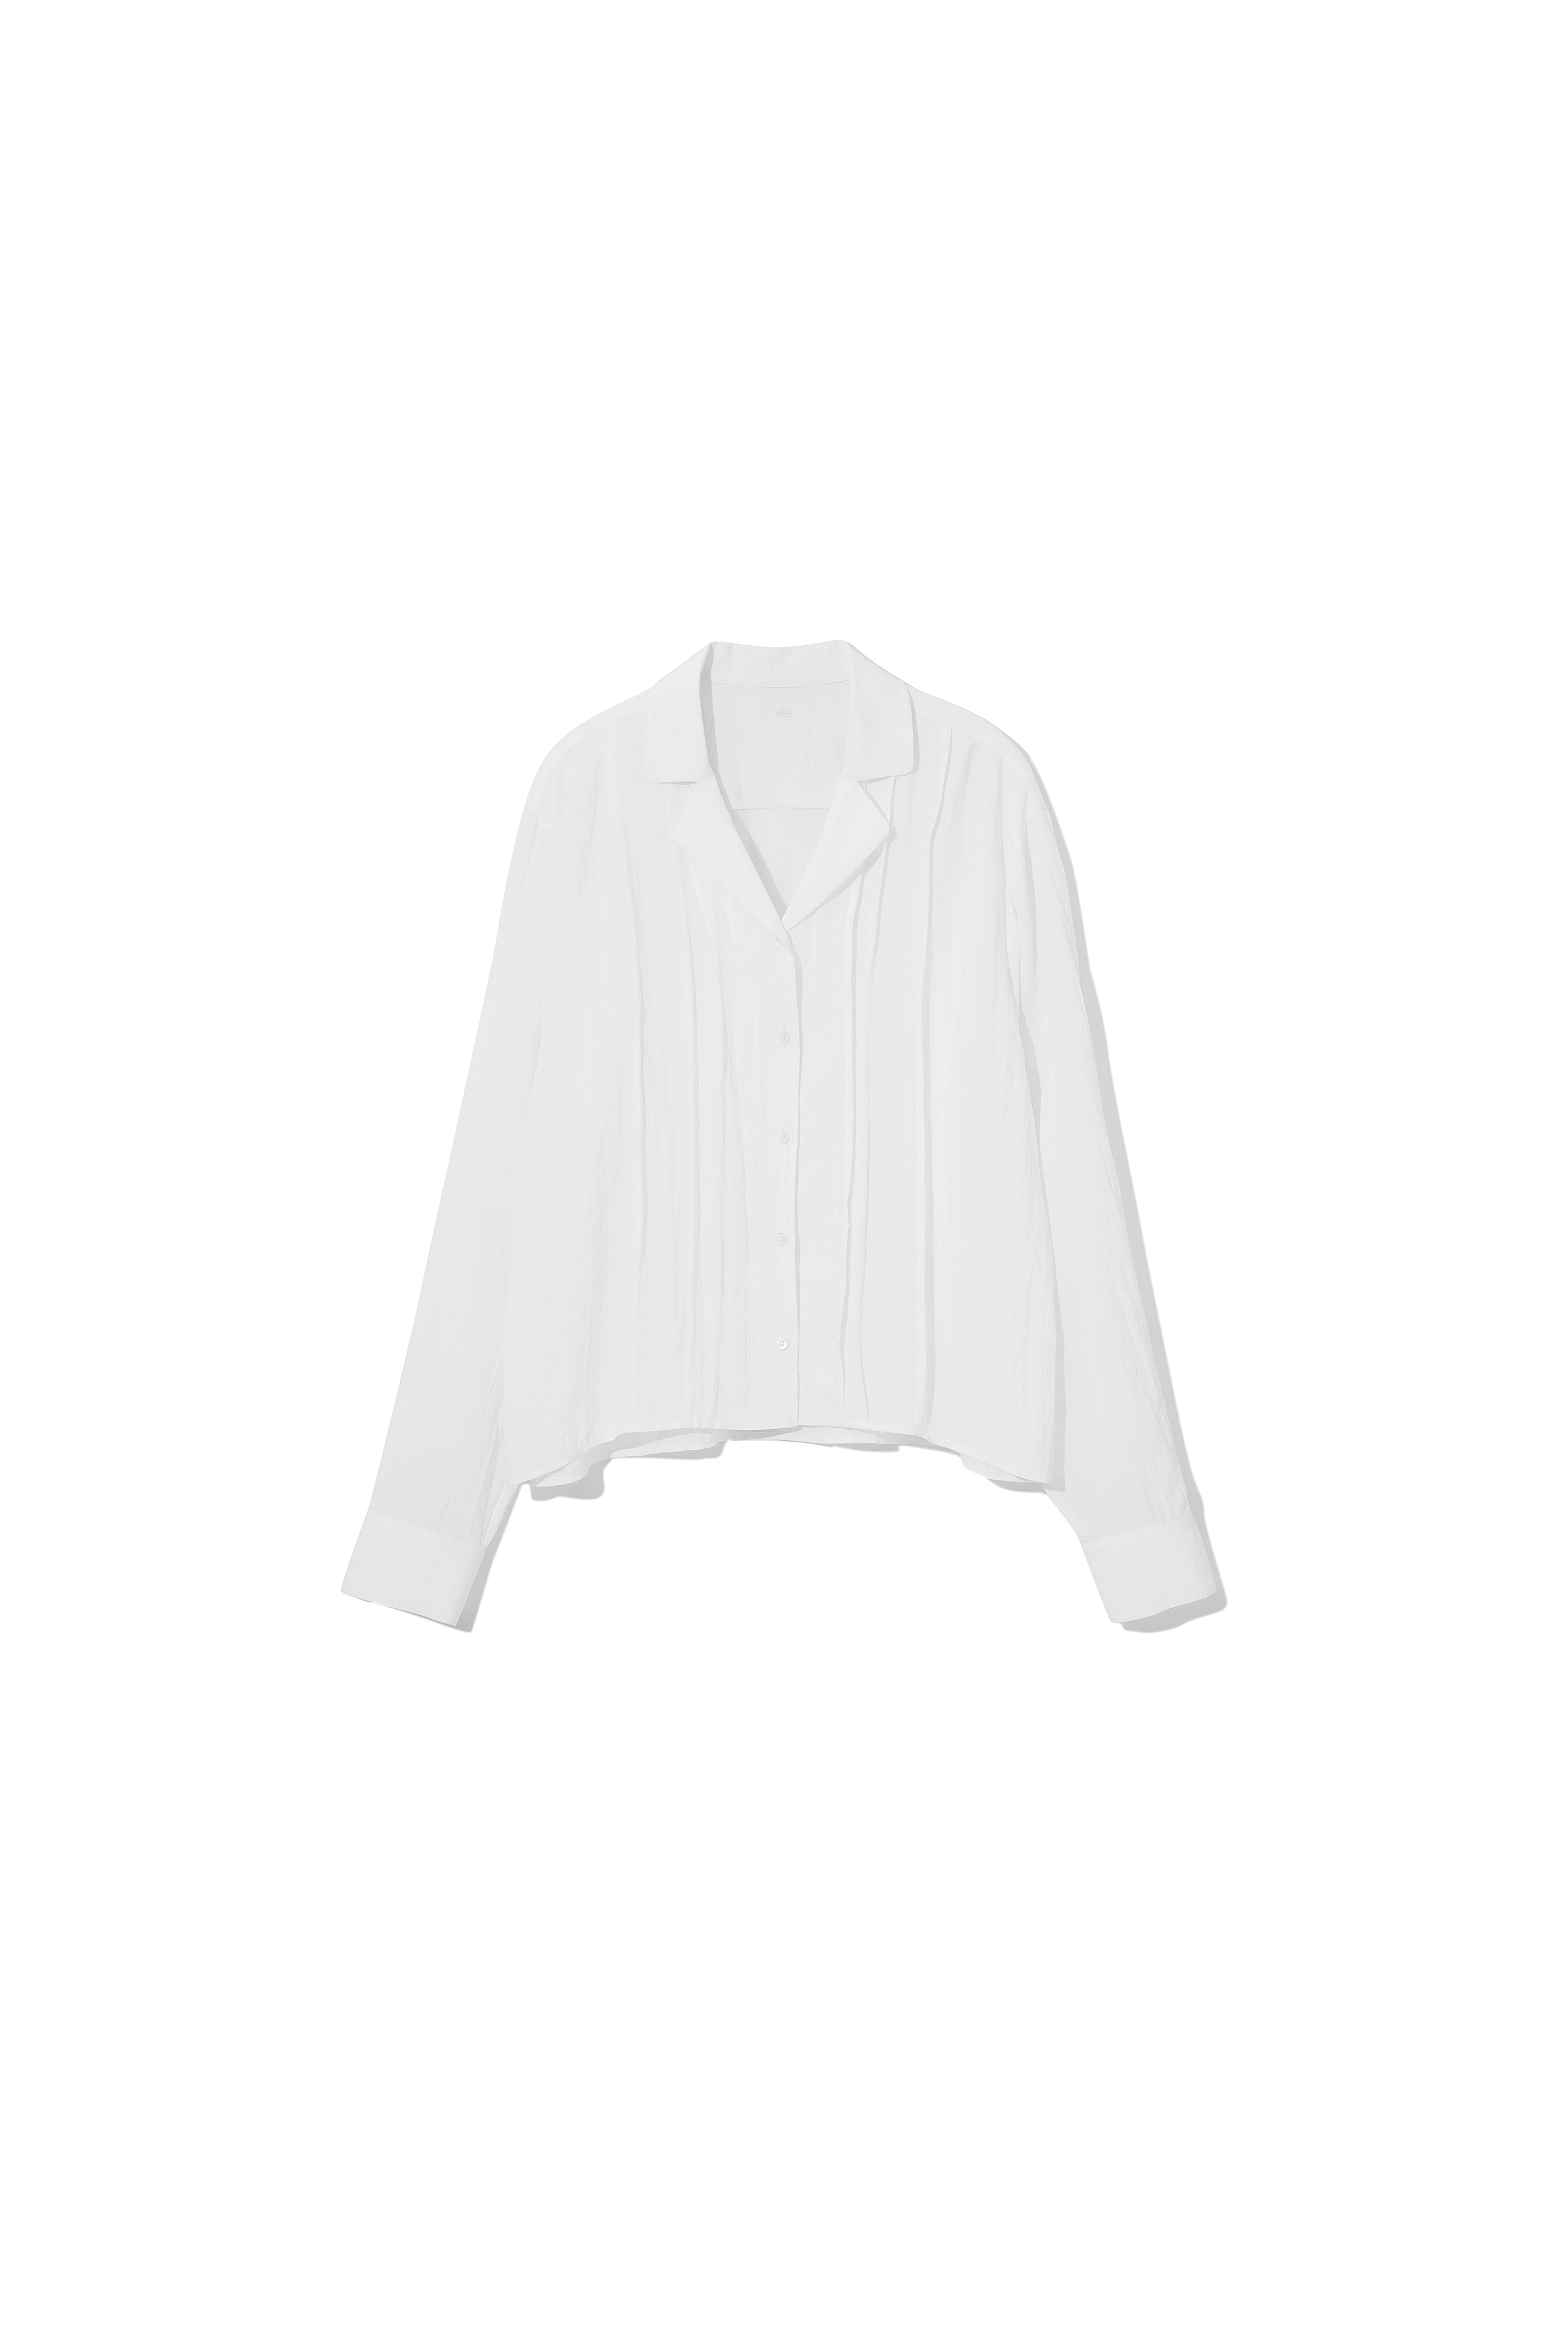 3rd) Birkin Shirts White [04.25(THU) 20:00 OPEN]